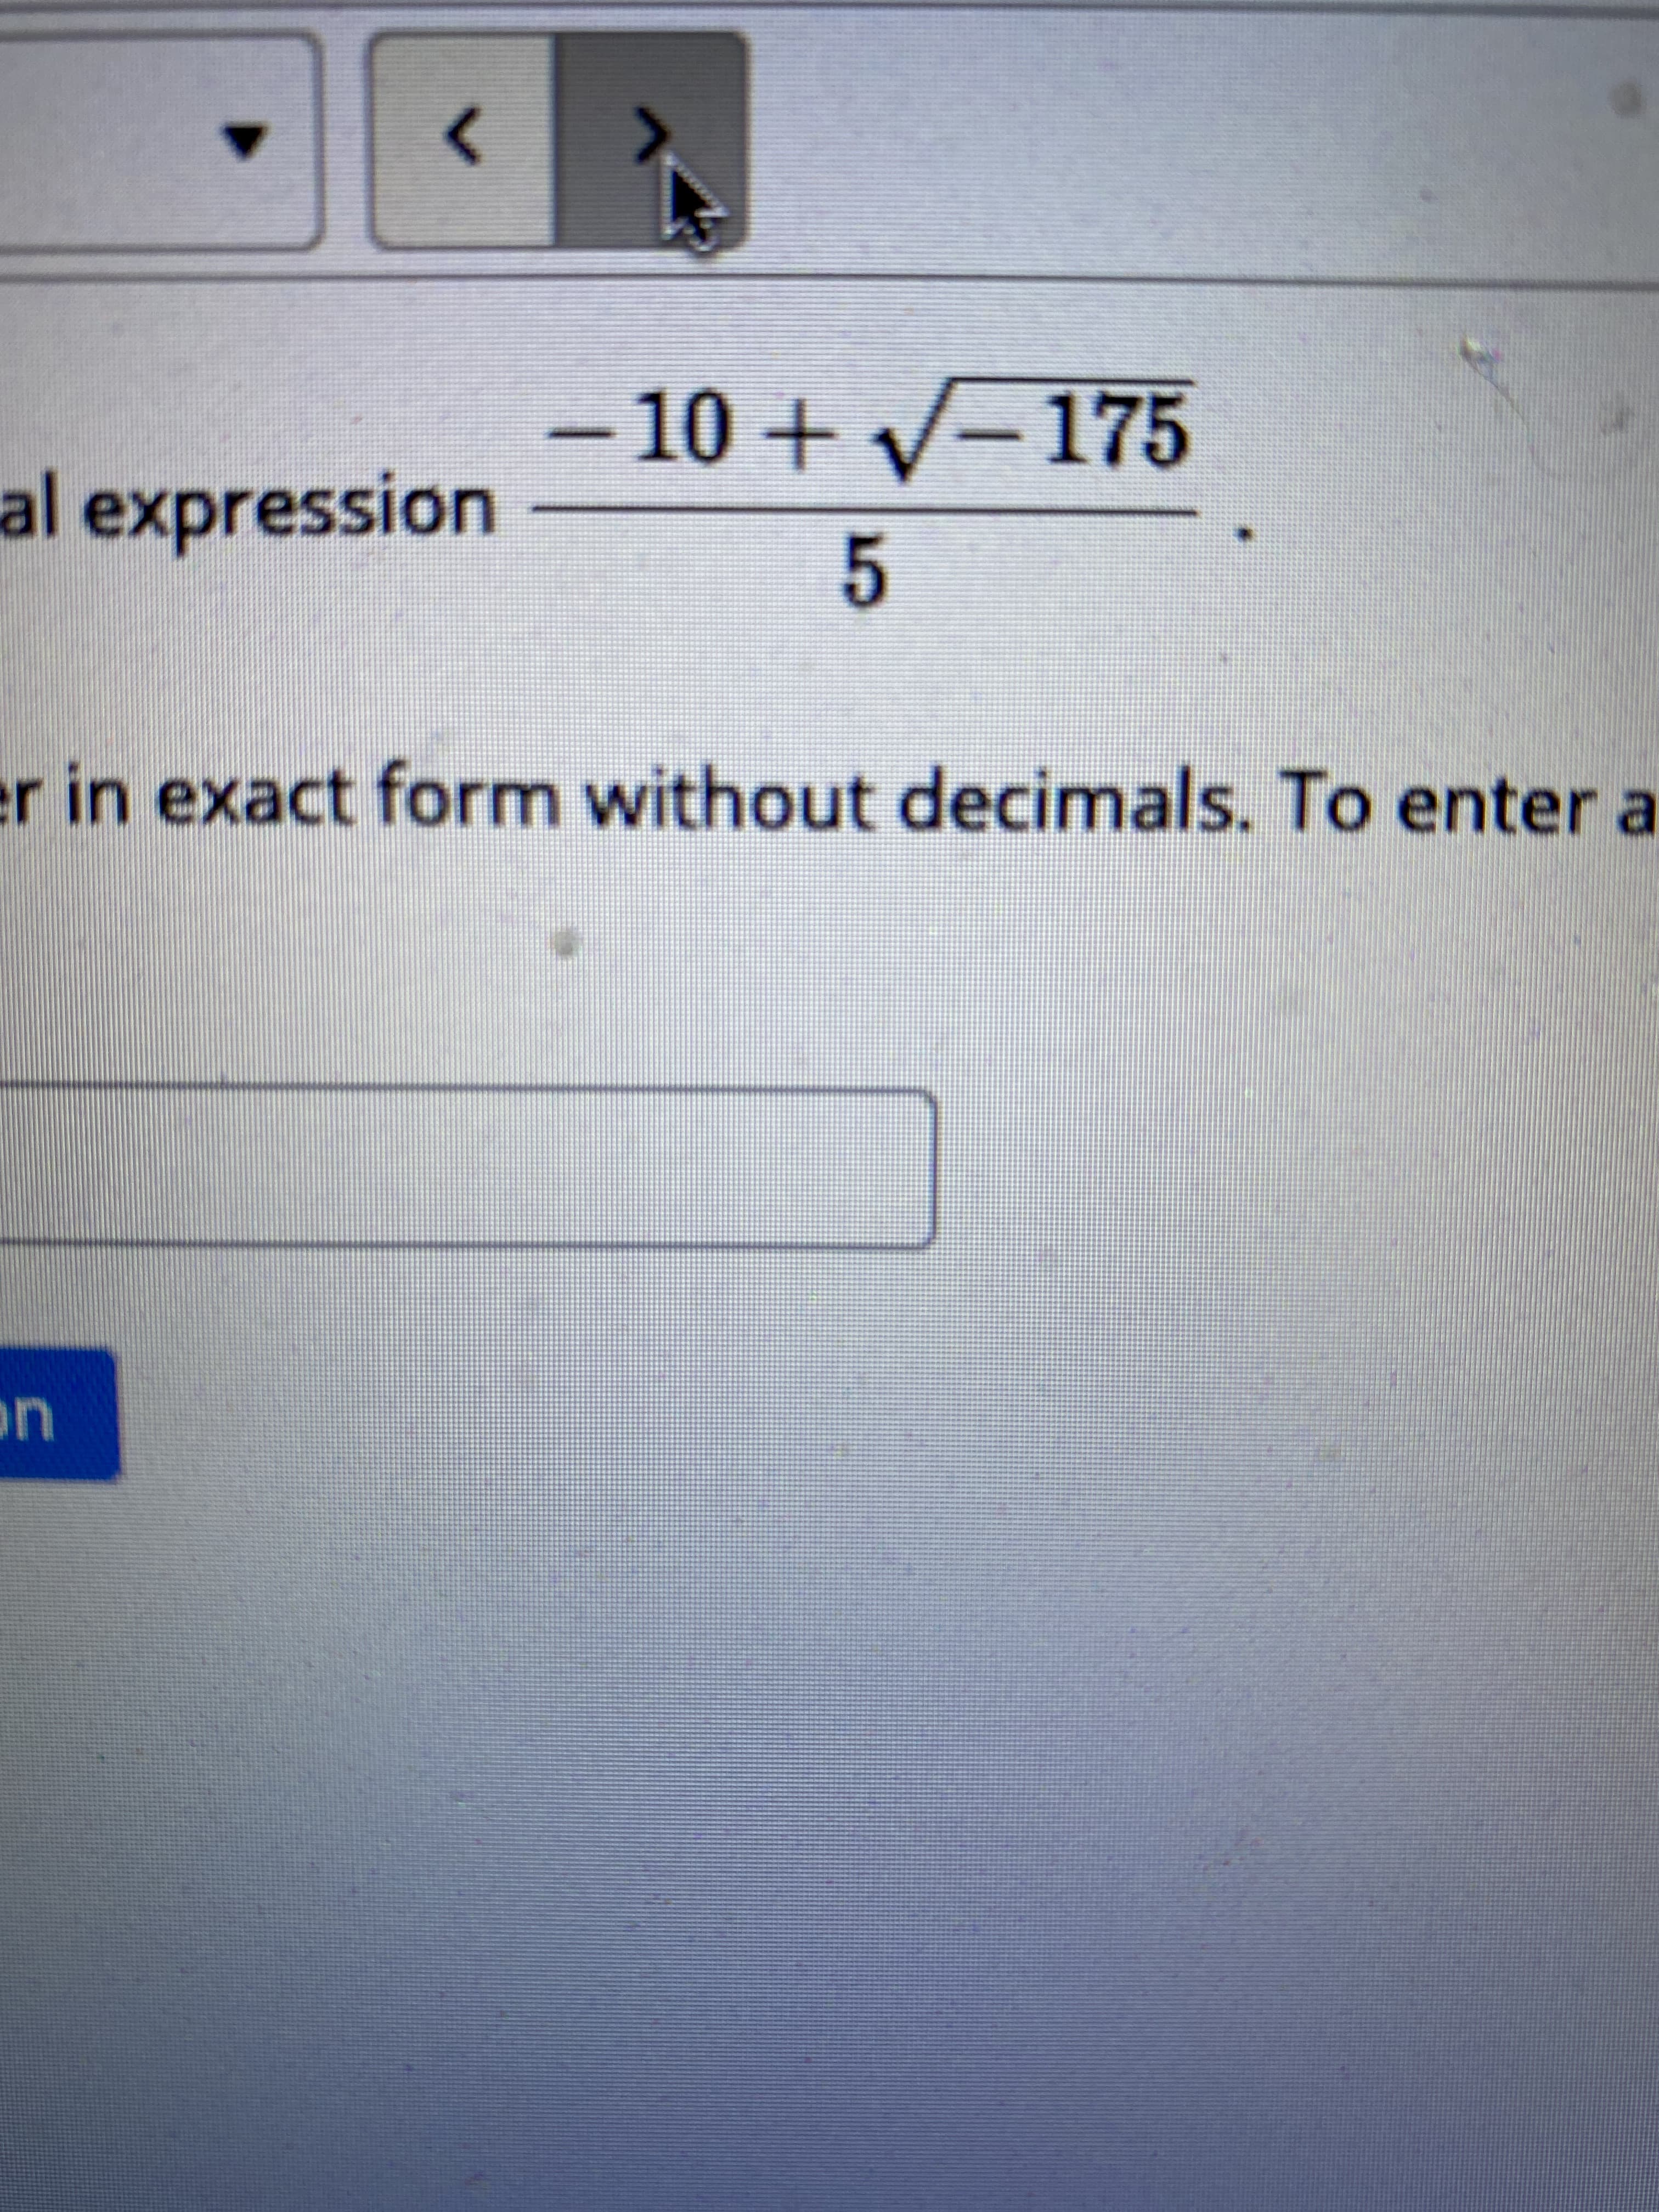 - 10 +V-175
al expression
5
er in exact form without decimals. To enter a
on
